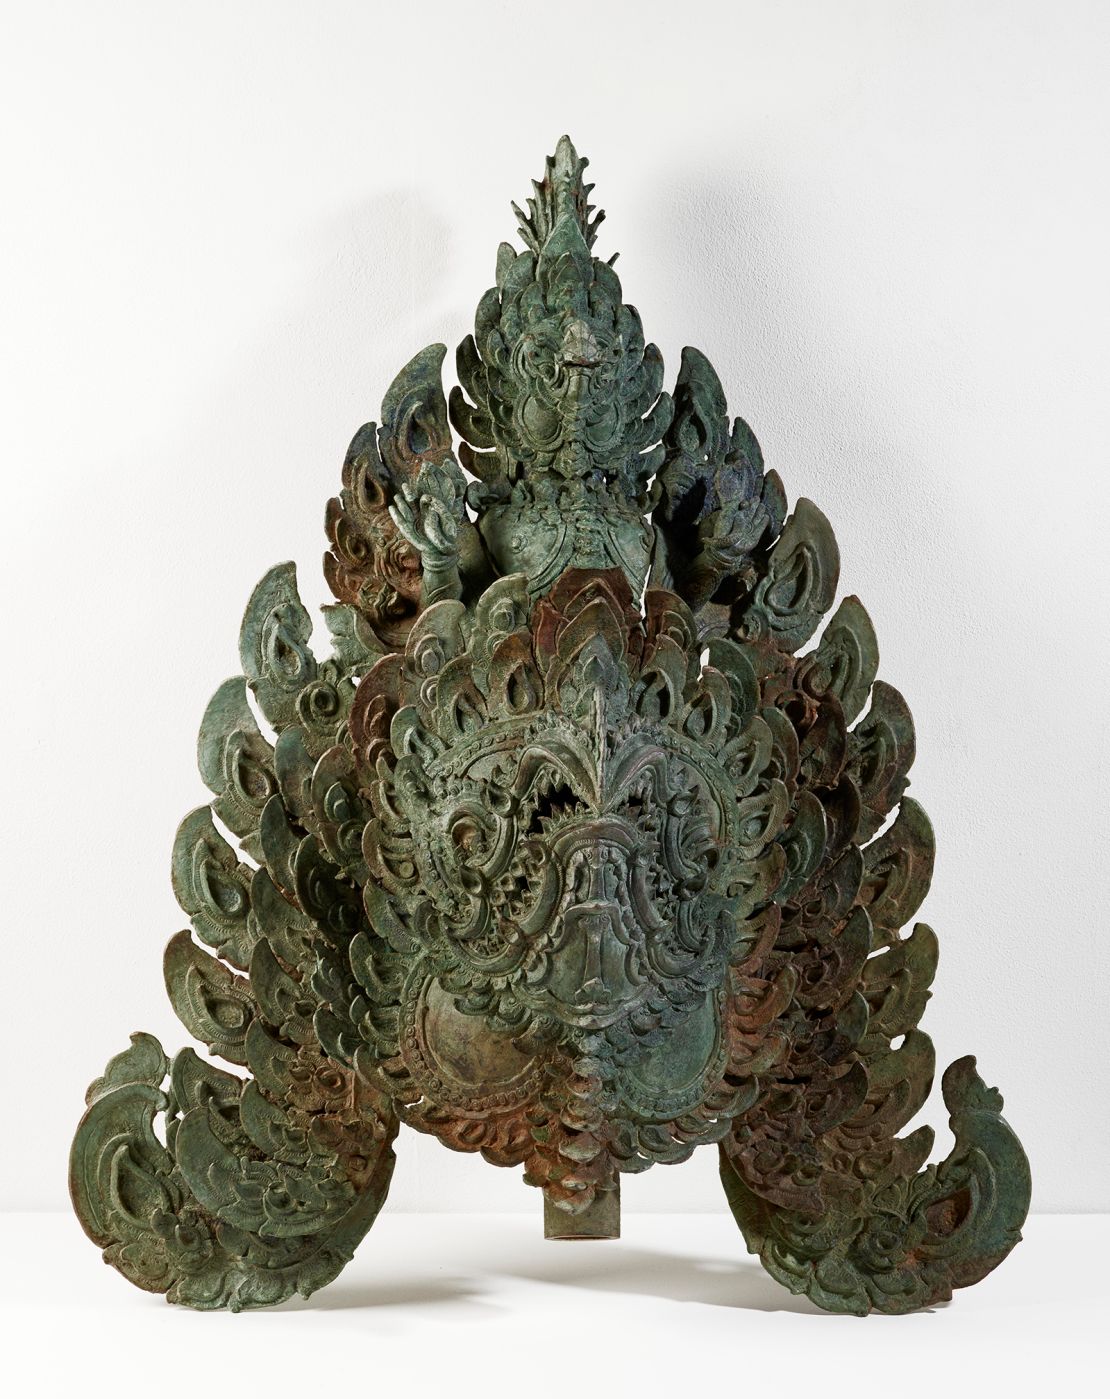 This bronze carving of a legendary Garuda bird would have adorned a ship.